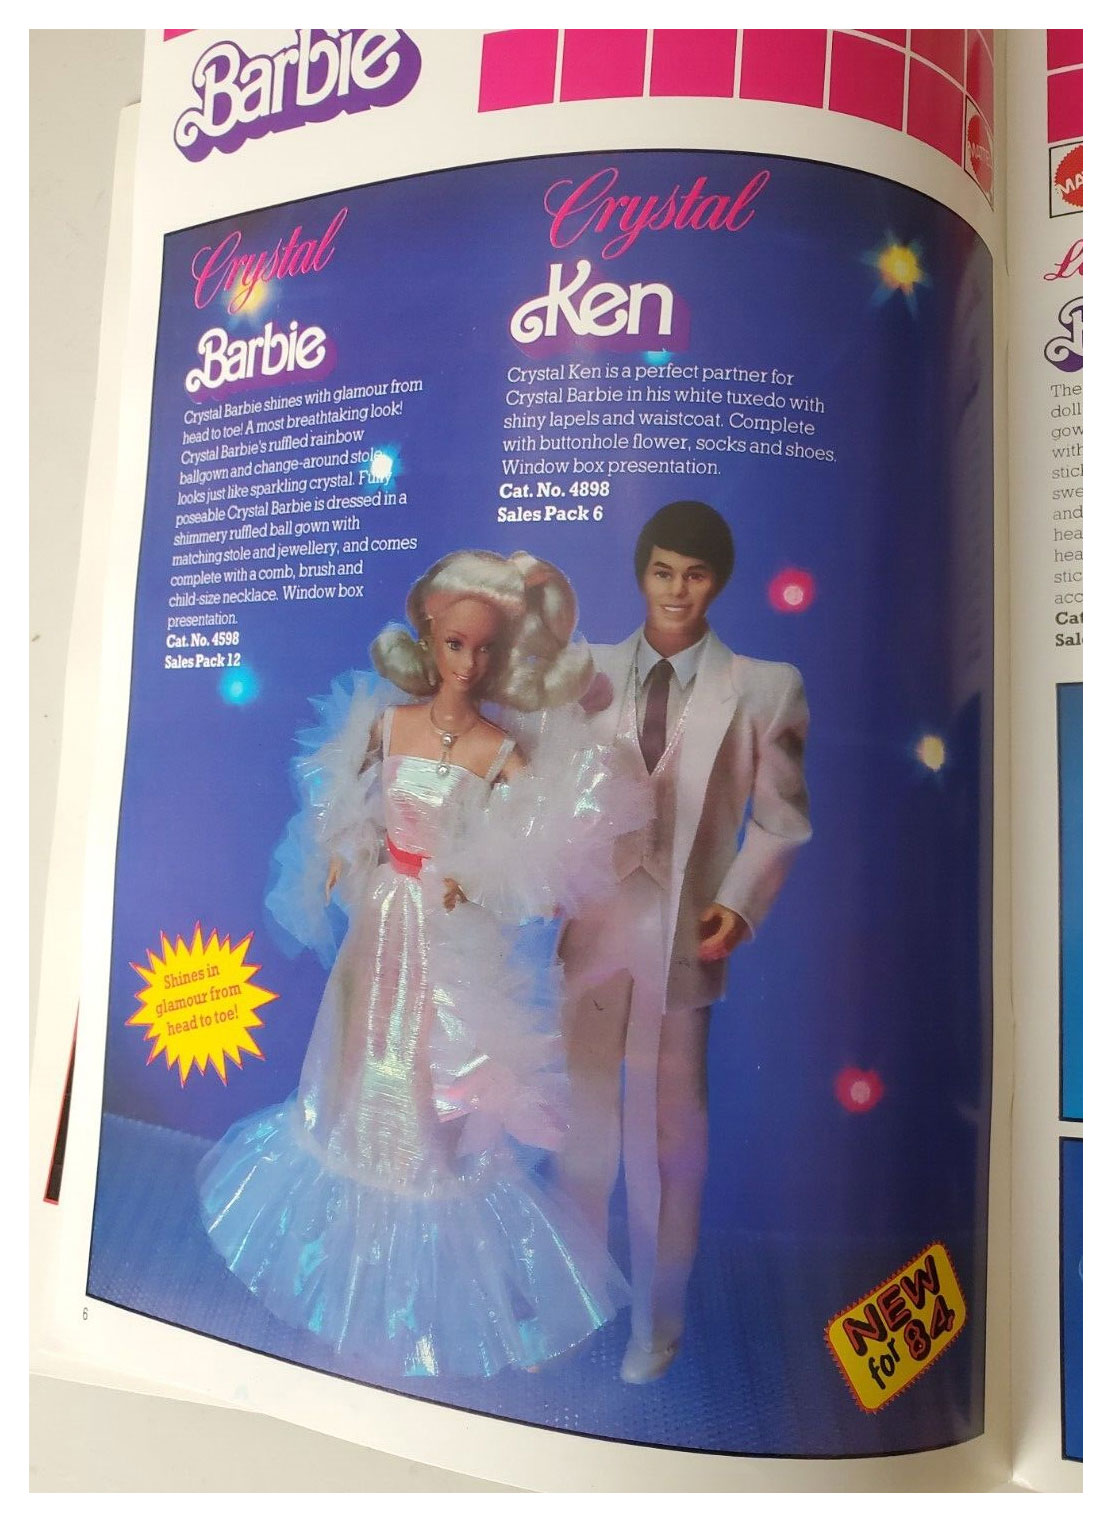 From British Mattel 1984 catalogue